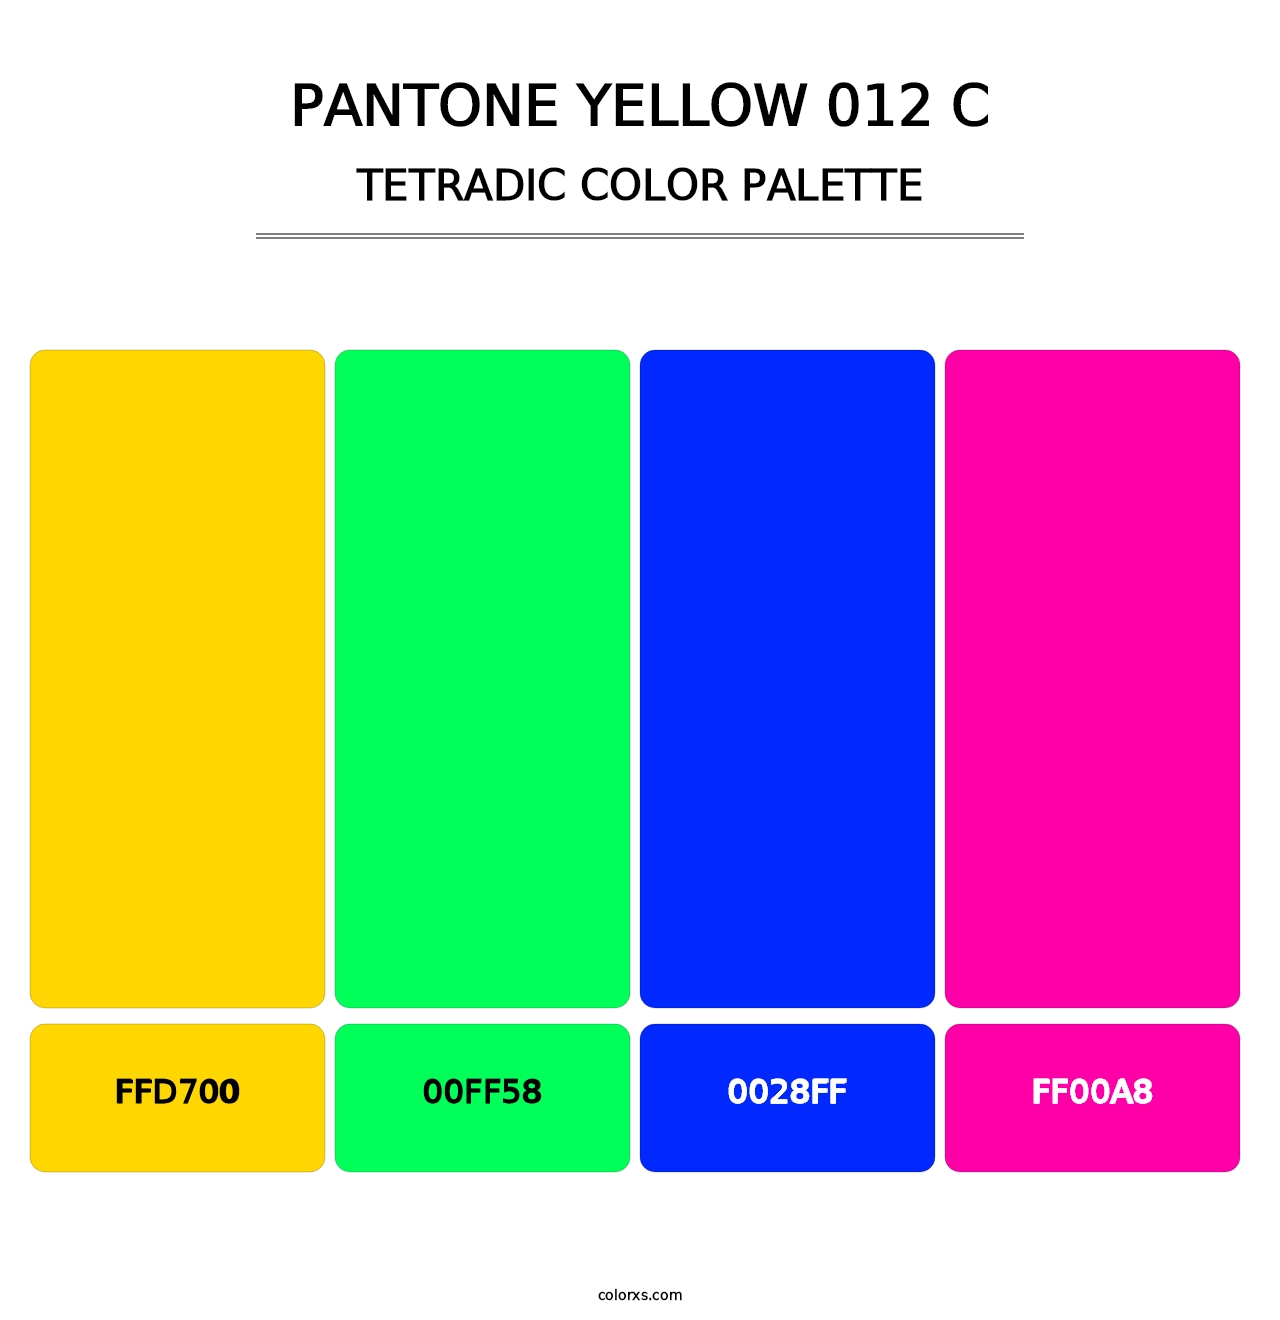 PANTONE Yellow 012 C - Tetradic Color Palette